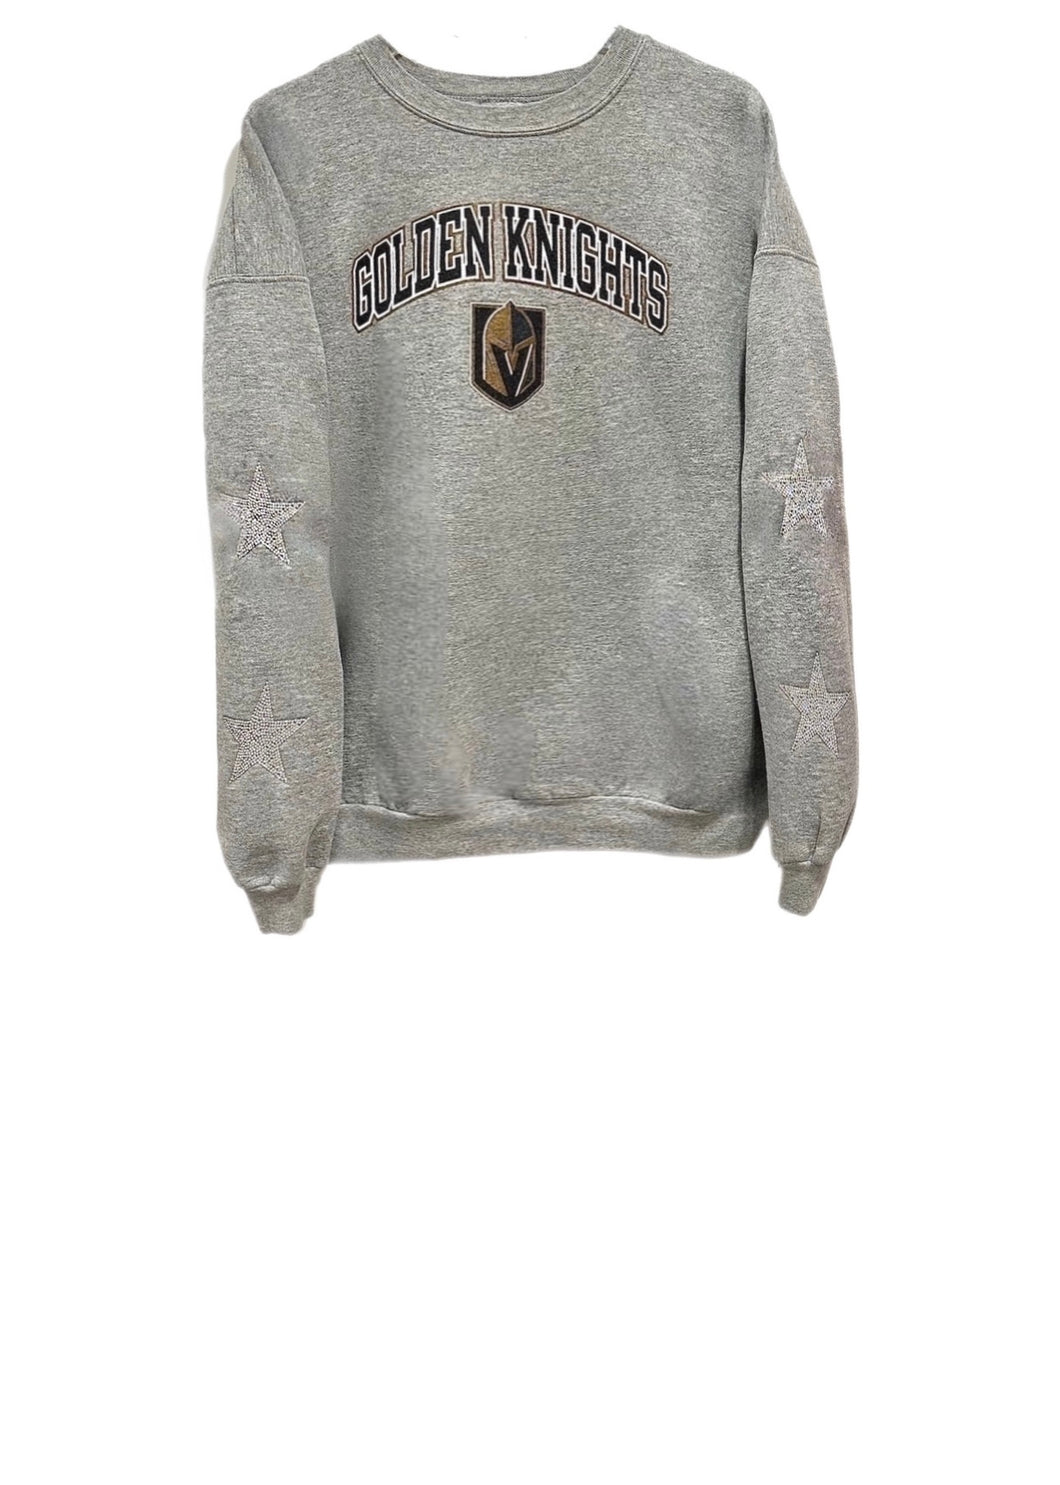 Vegas Golden Knights, NHL Vintage Sweatshirt with Crystal Star Detail, Custom Crystal Name & Number